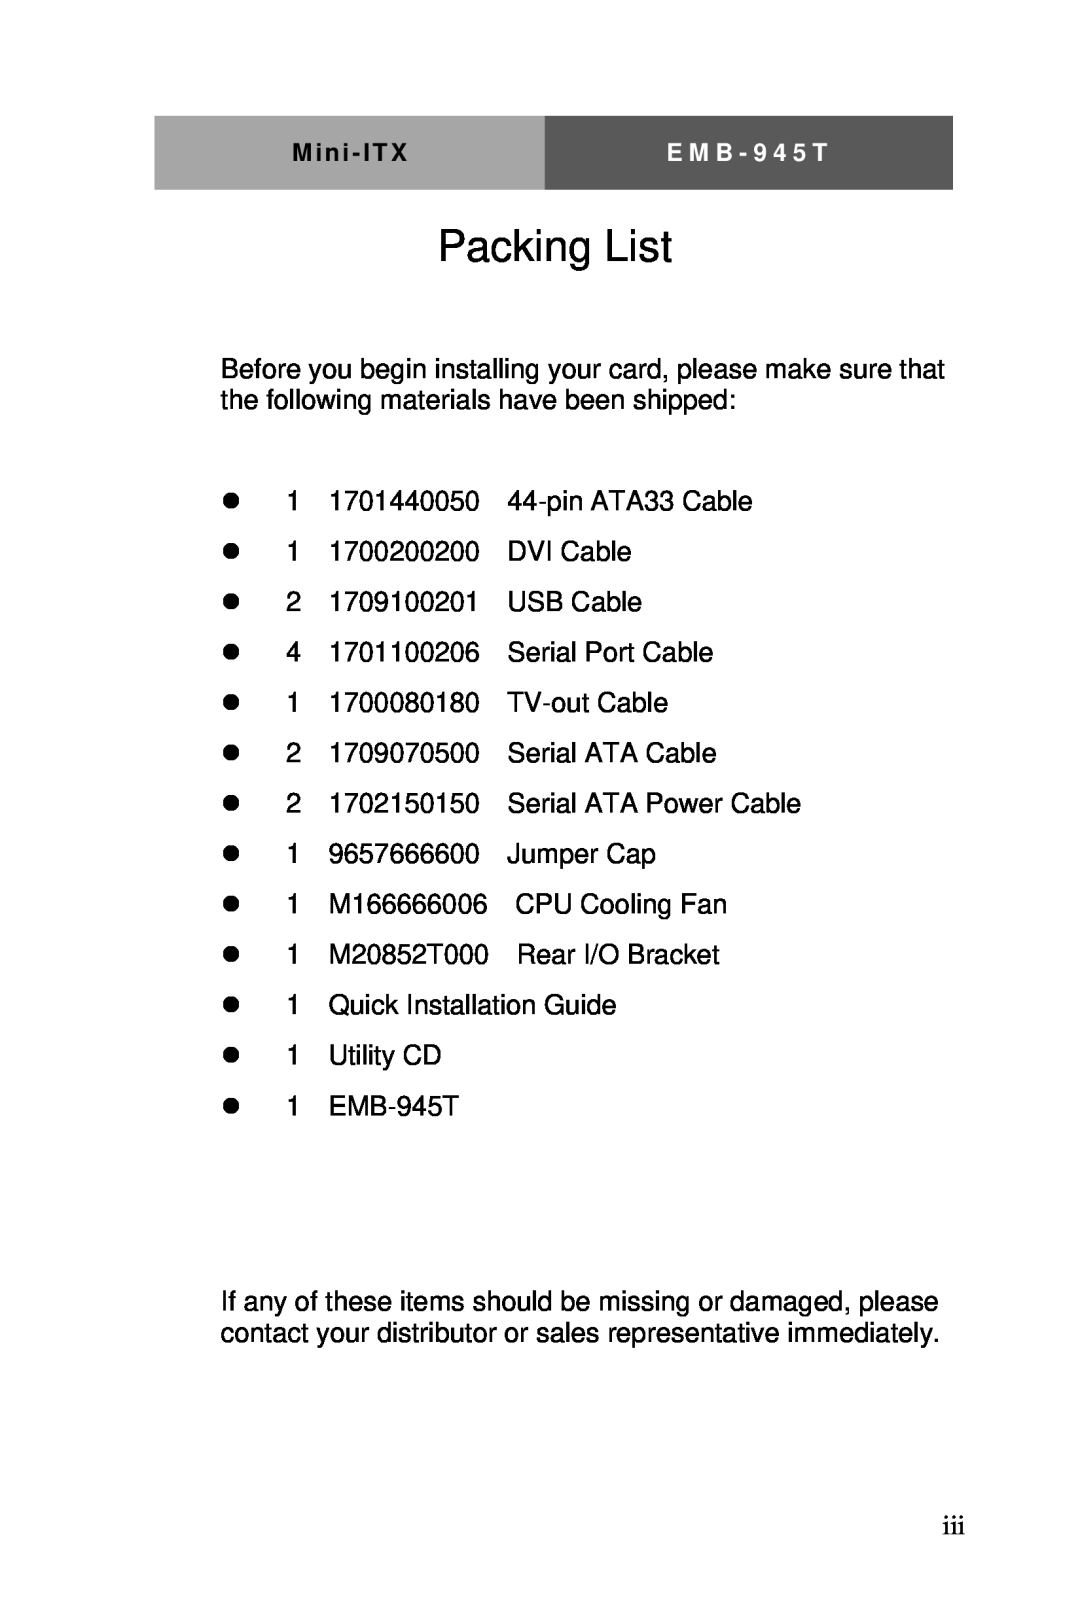 Intel EMB-945T manual Packing List 